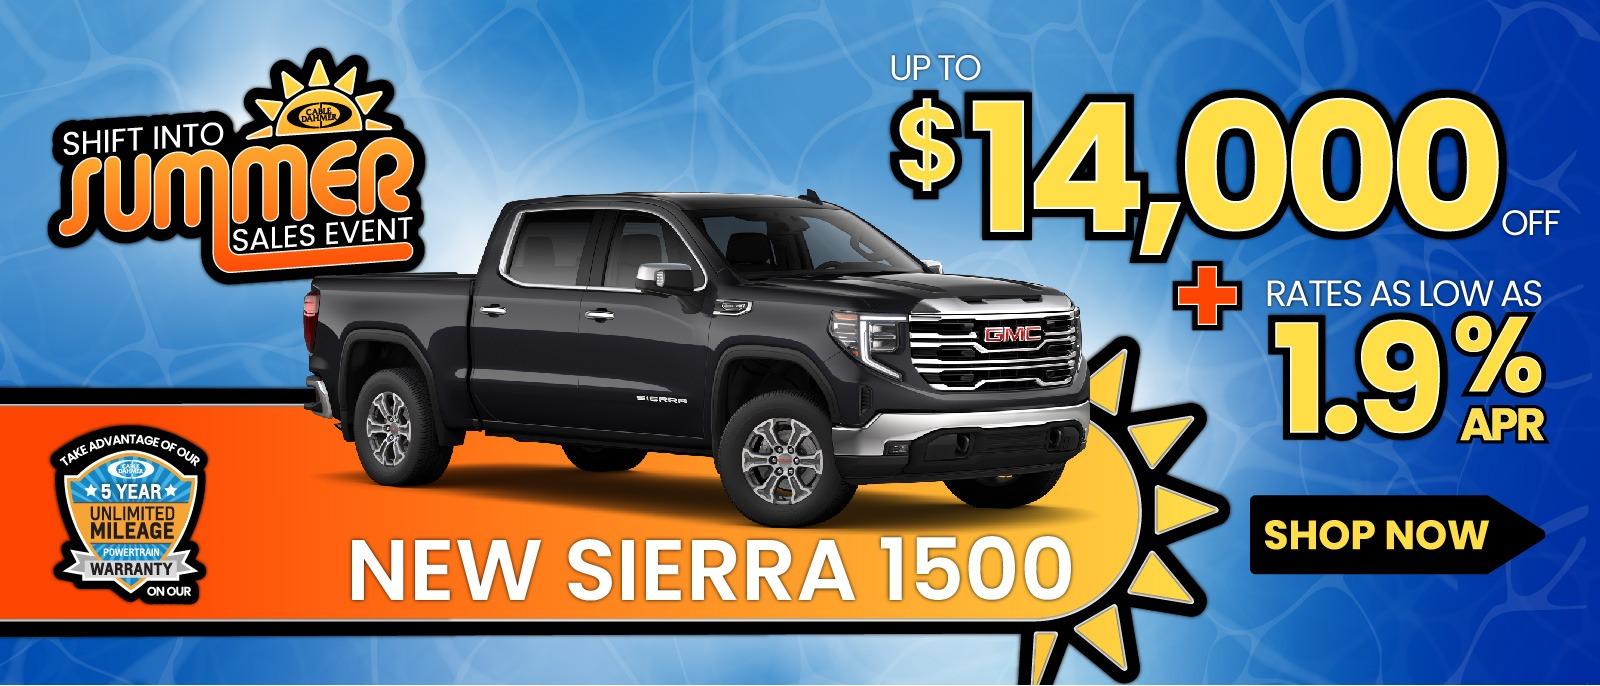 New Sierra 1500